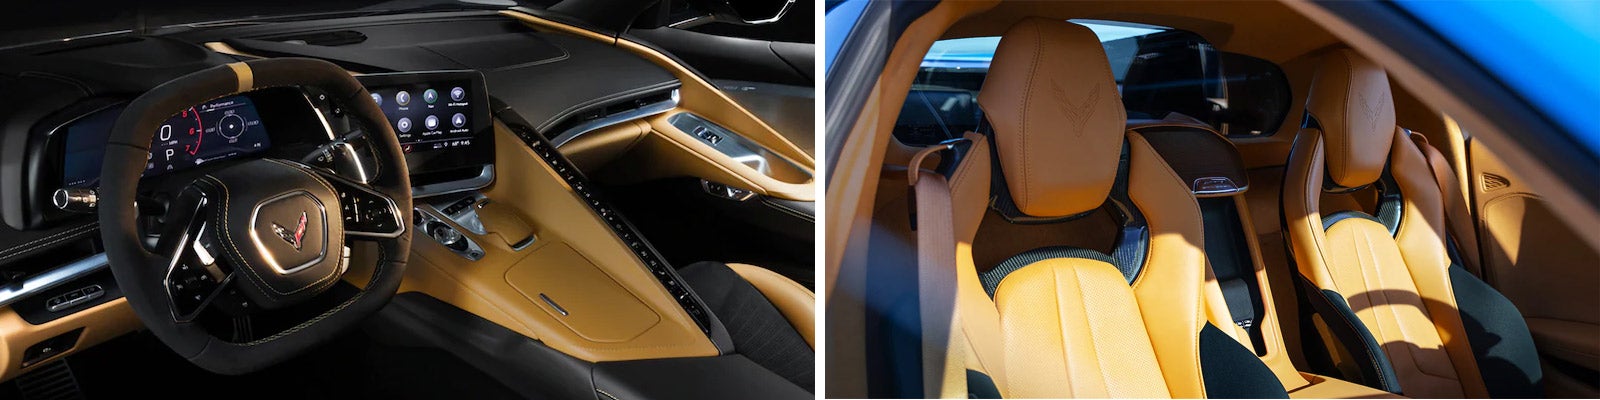 2021 Chevy Corvette interior